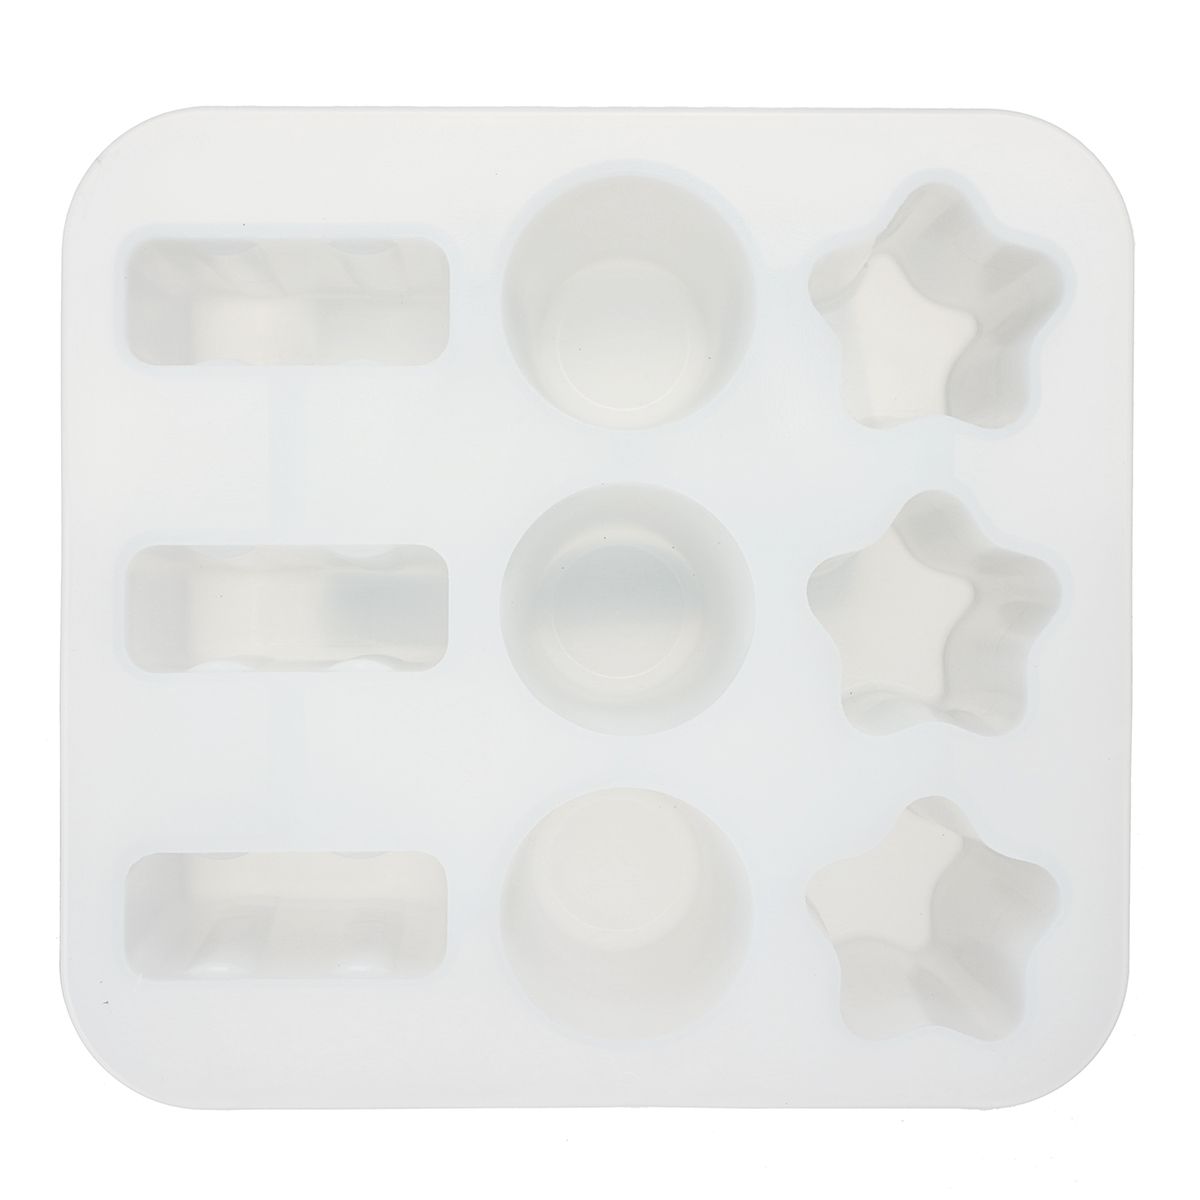 Silicone-9-Cavity-Frozen-Ice-Cream-Lolly-Juice-Maker-Pop-Mold-Mould-Popsicle-Stick-Yogurt-Refrigerat-1338403